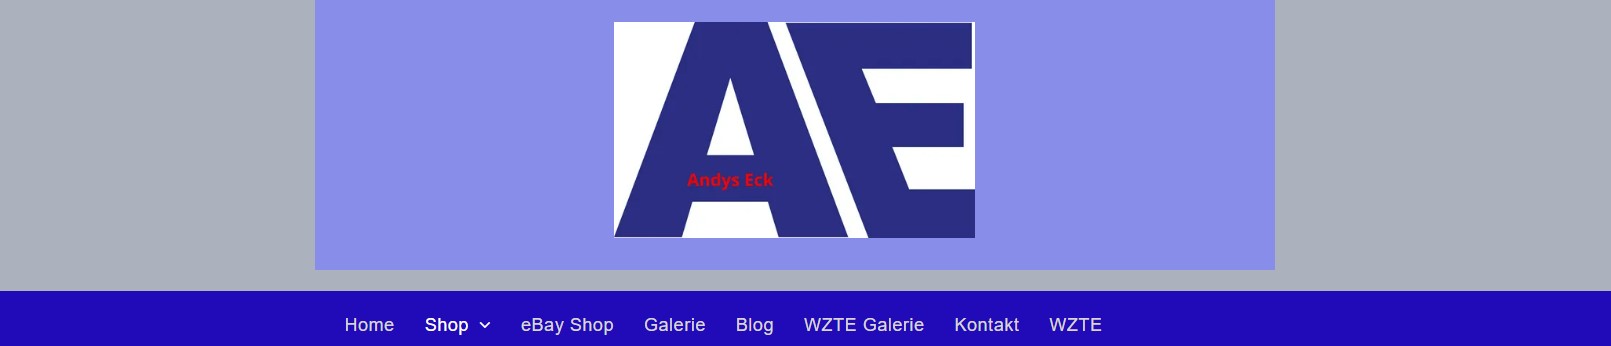 Andys Eck – Zeven 27404